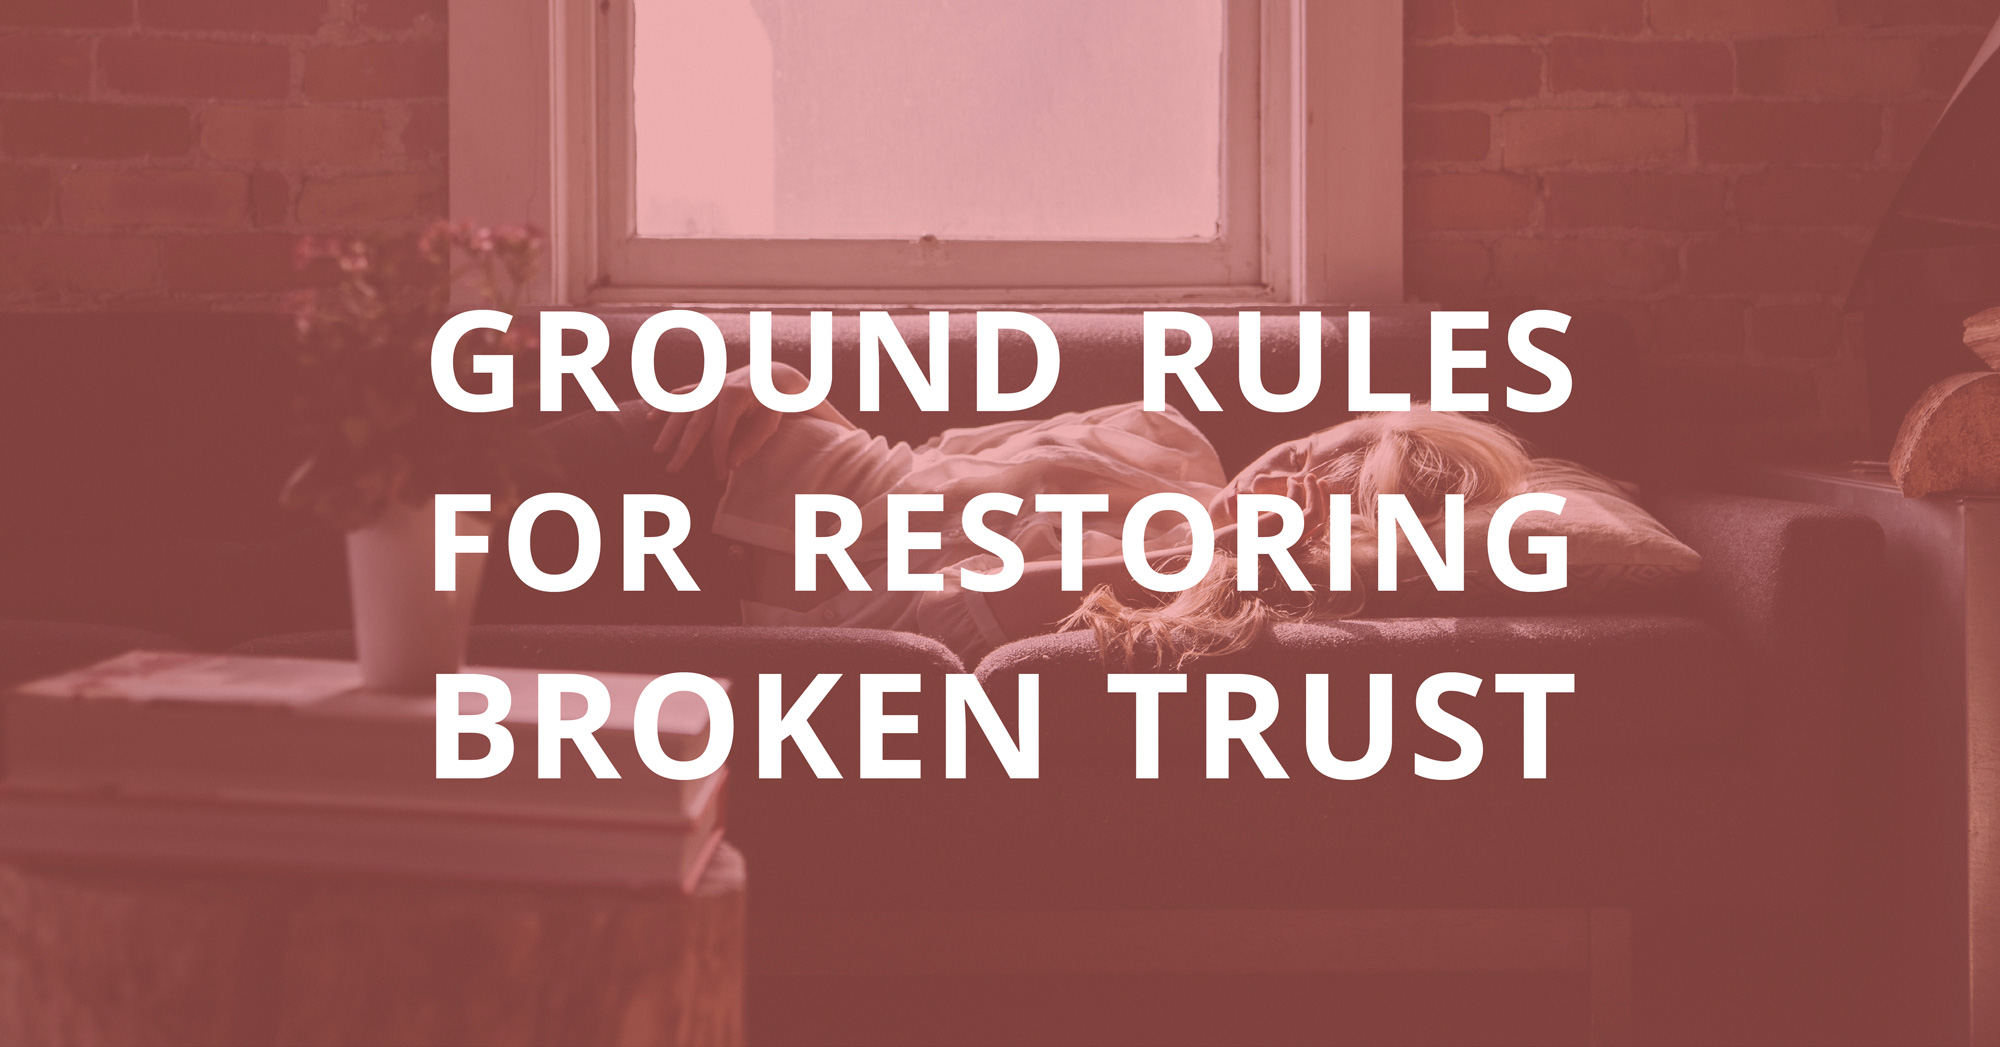 Ground Rules for Restoring Broken Trust image